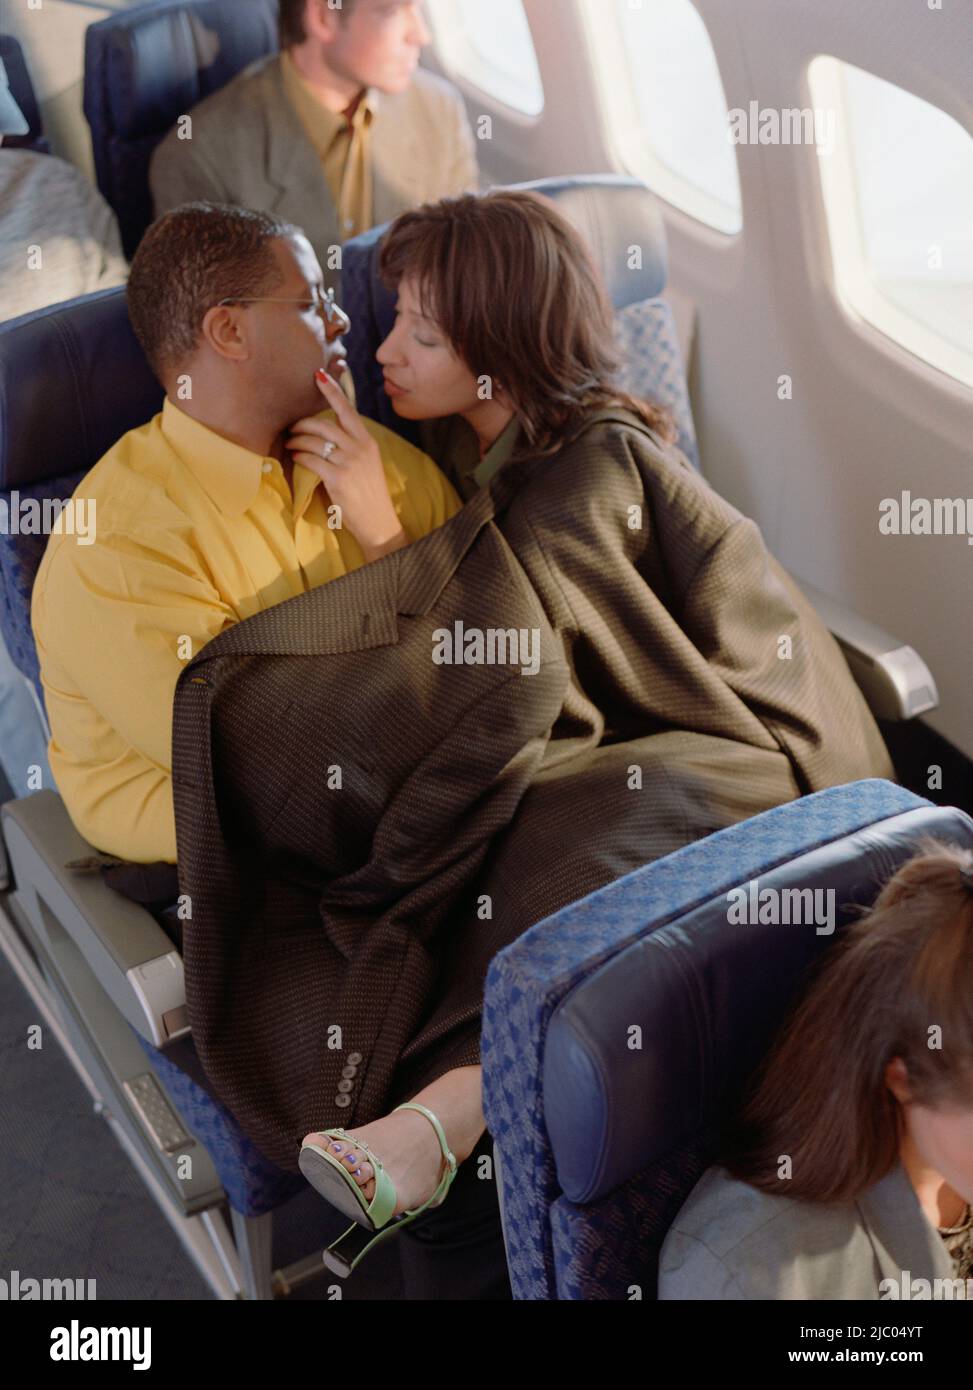 Mature couple cuddling on airplane Stock Photo